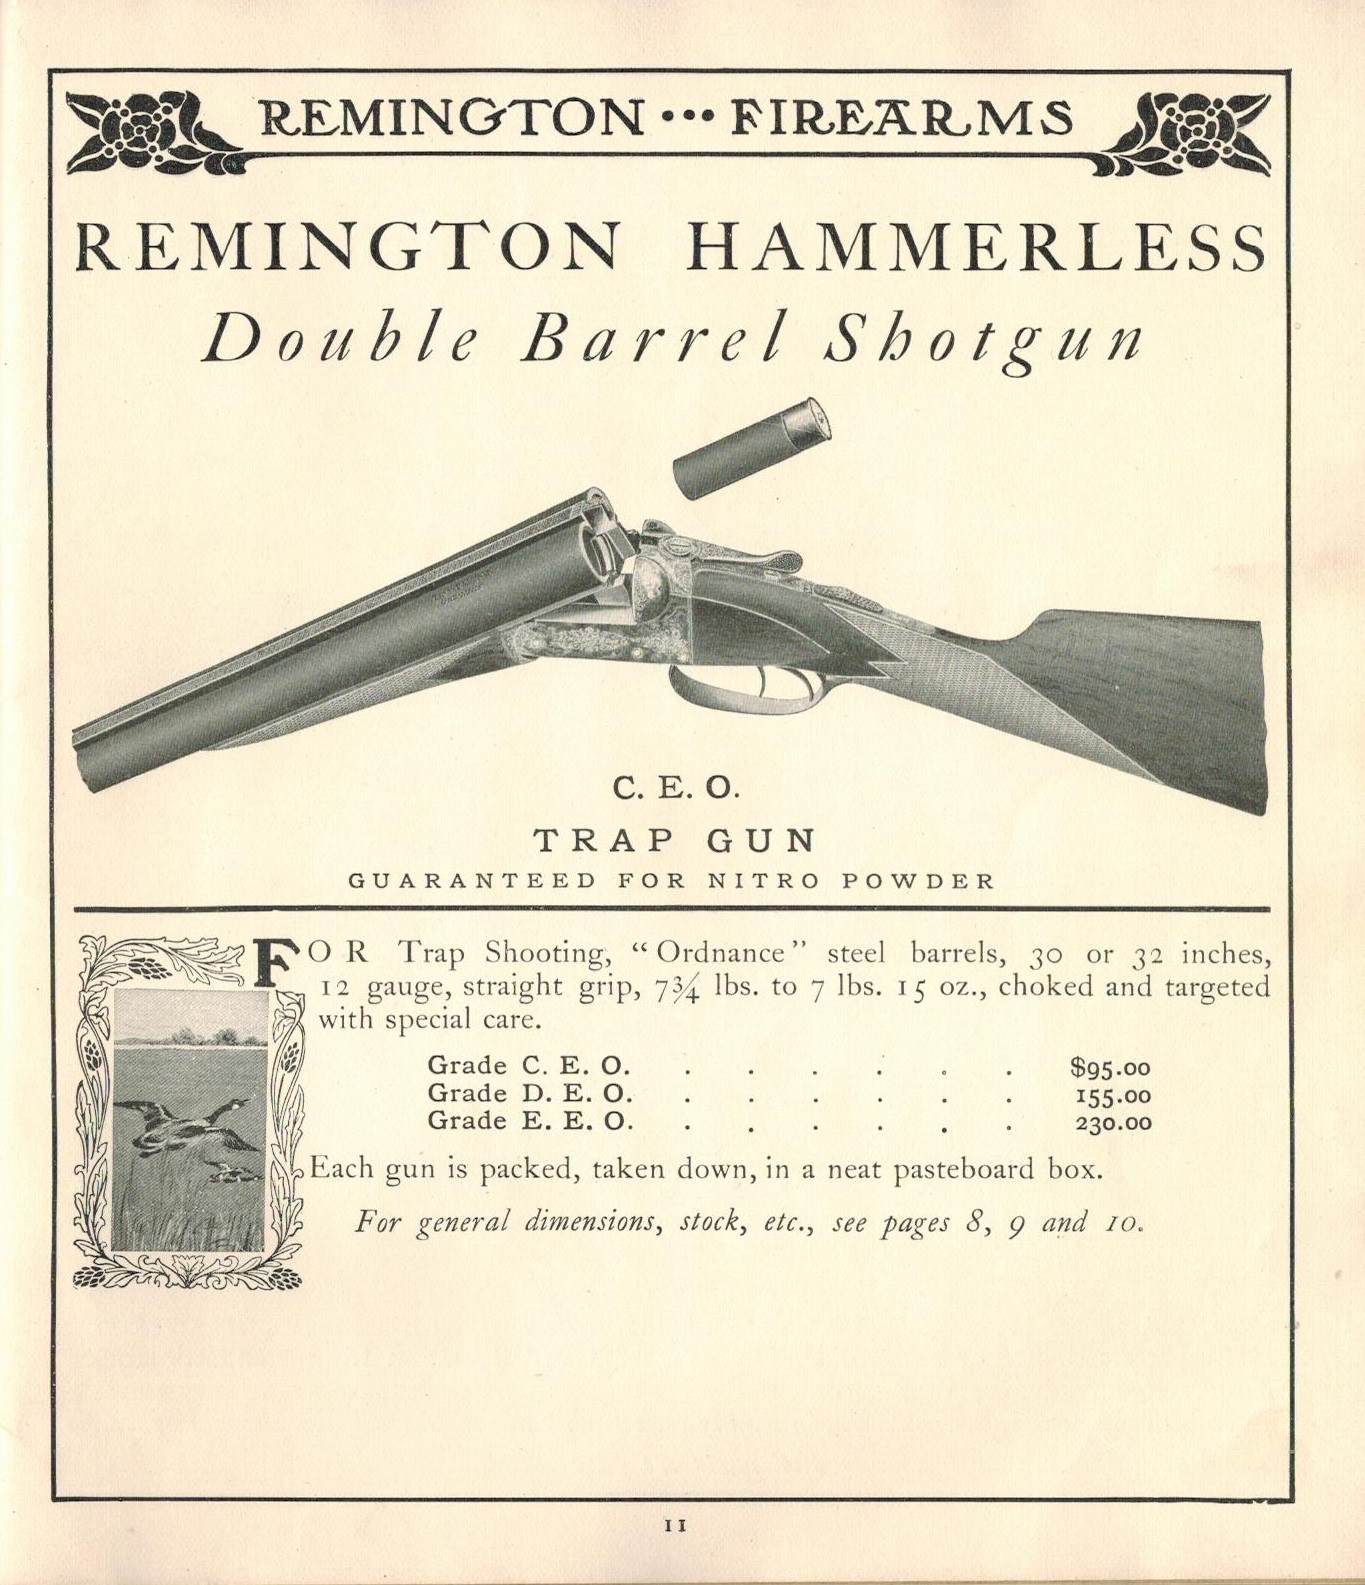 1905-06 Catalog pg 11, Trap Gun.jpeg